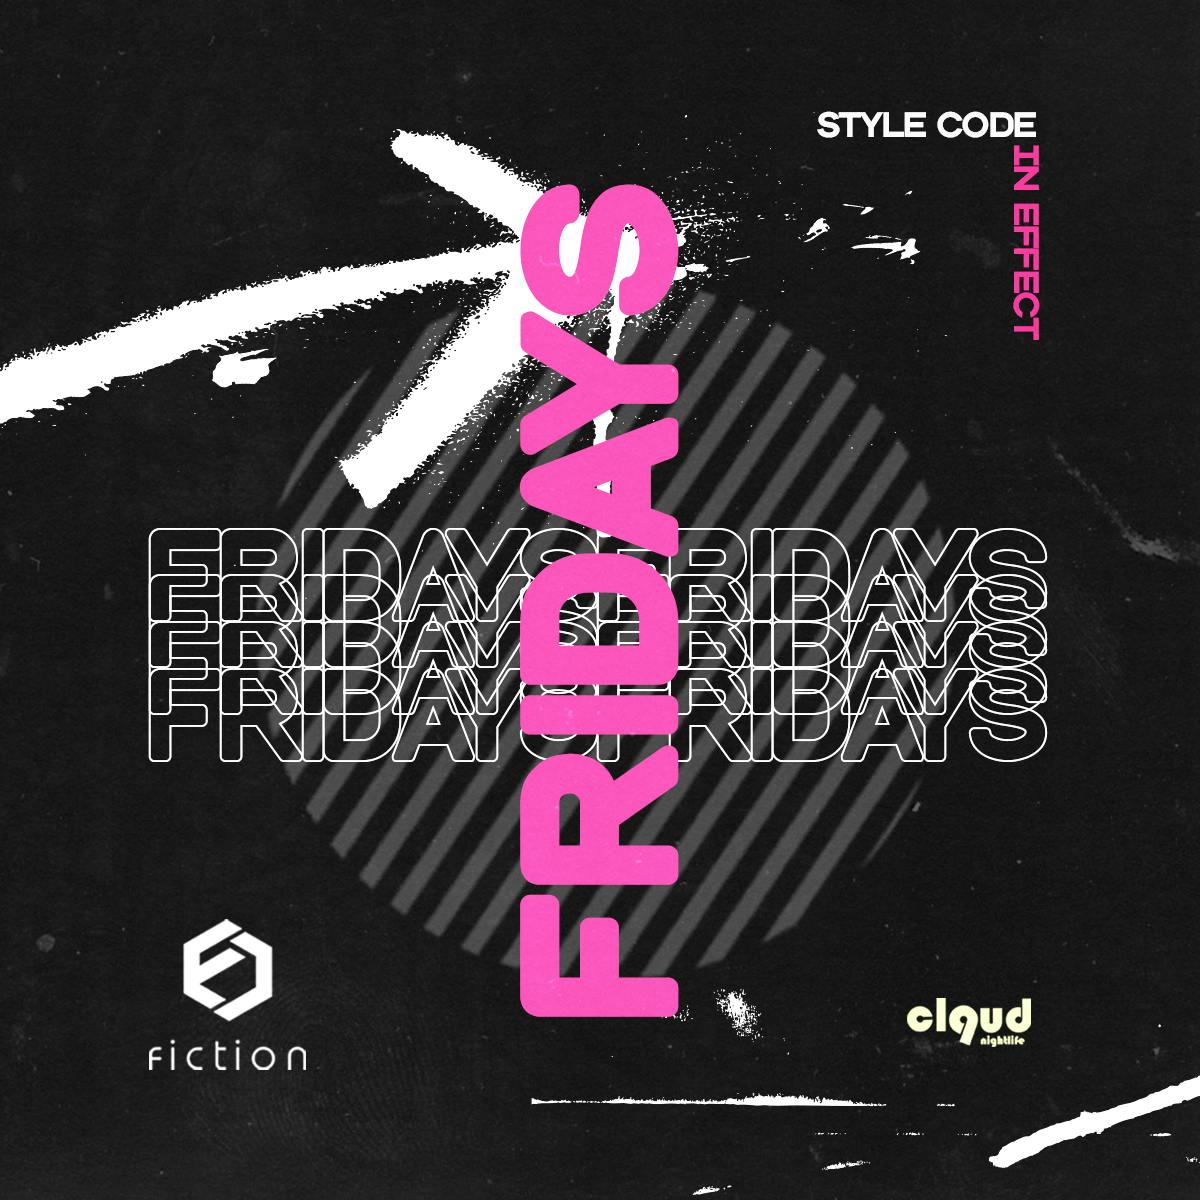 Fiction Fridays